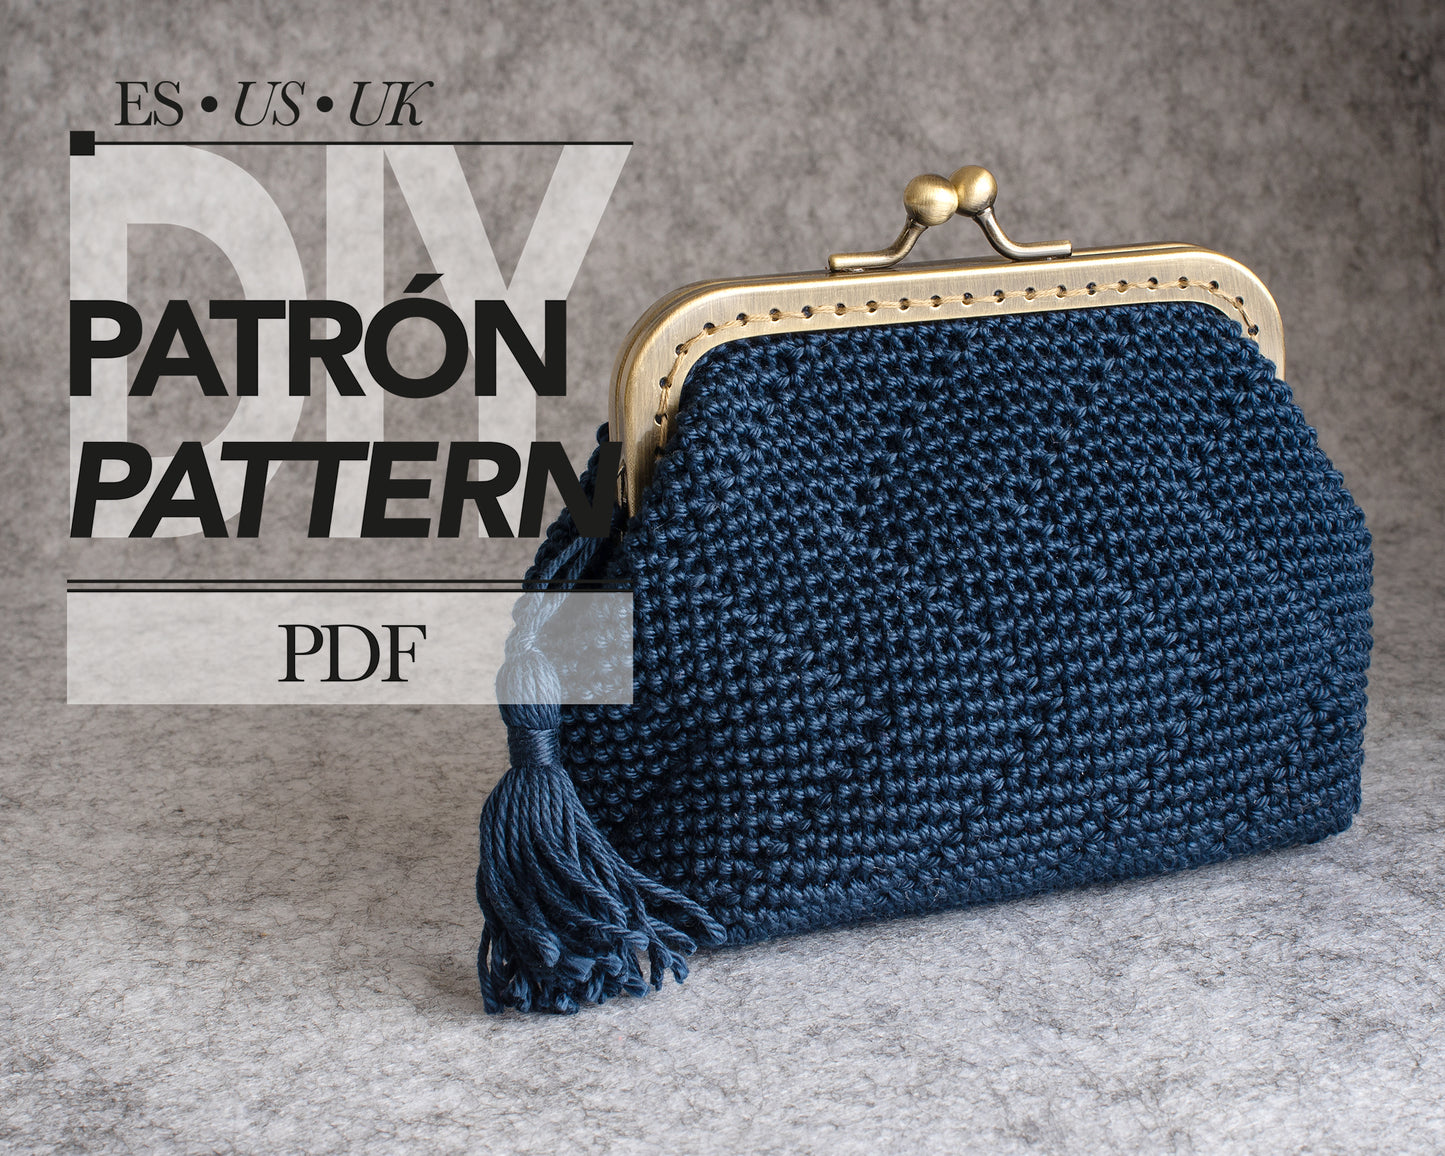 GEOMETRIC II design crochet purse pattern. Rectangular base, for 10.5cm clasp.